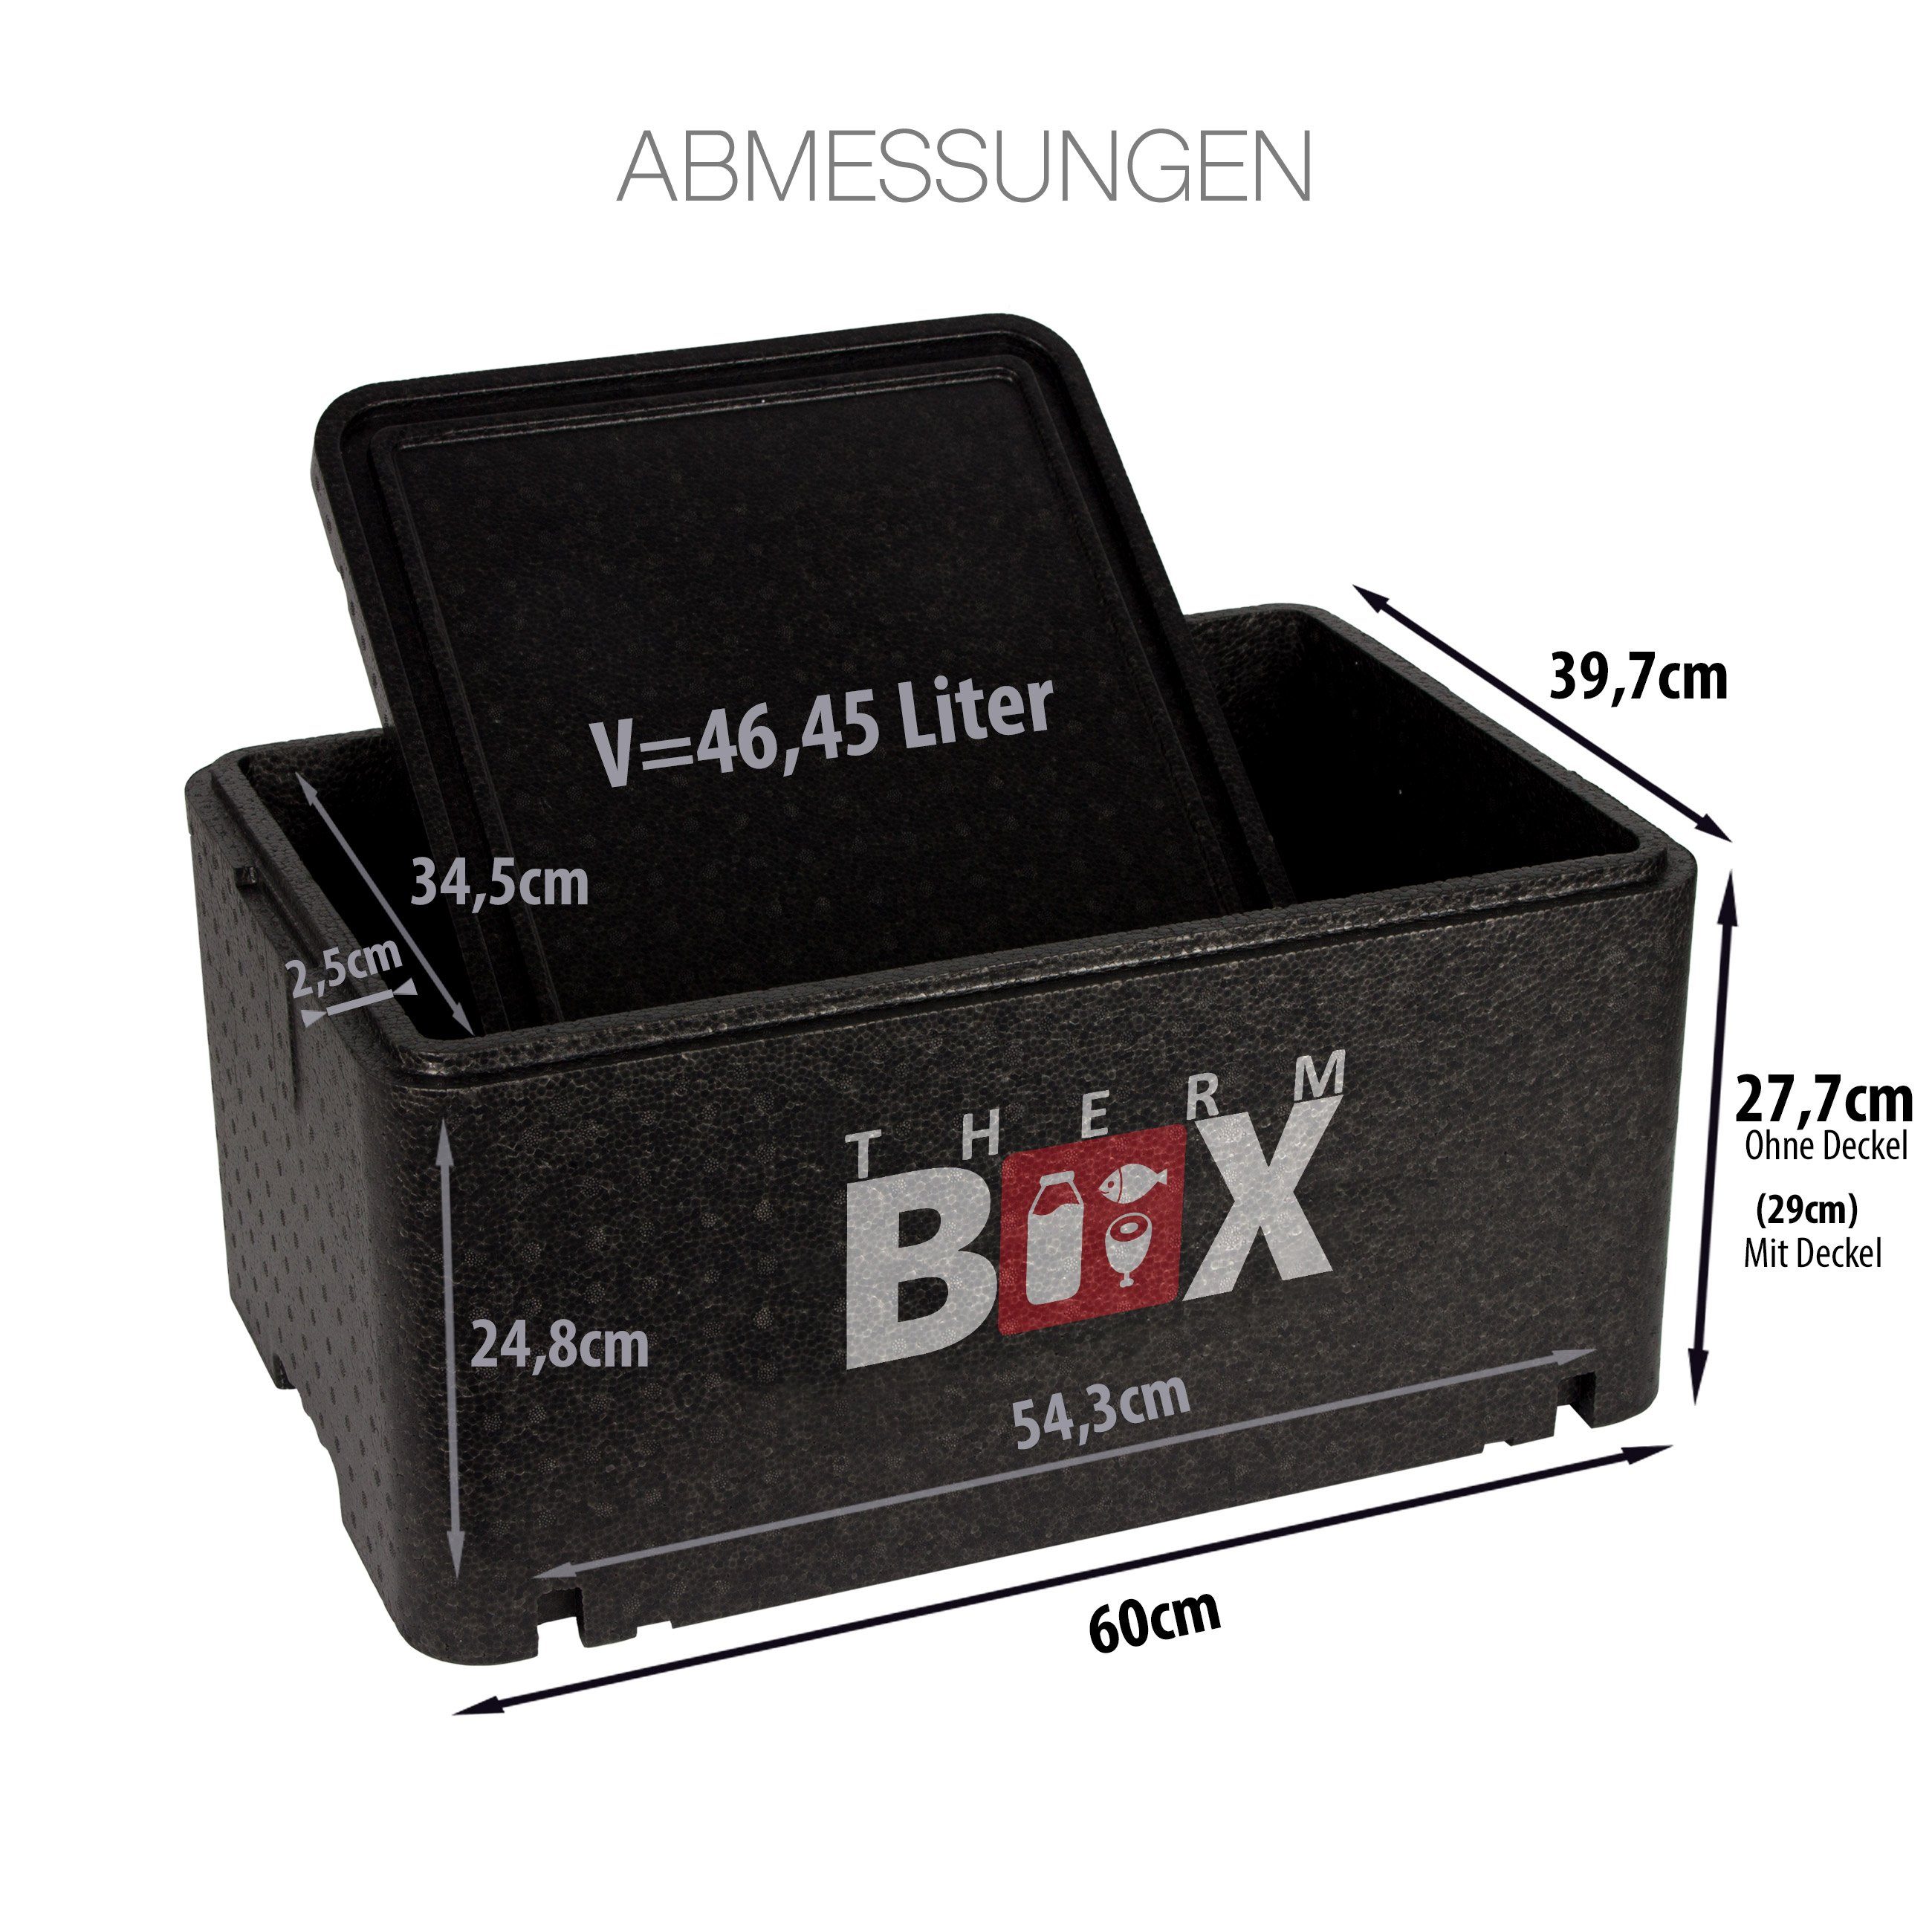 im Box Warmhaltebox GN1 Thermobehälter Deckel Isolierbox (1, Thermobox 46,5L Wiederverwendbar, Kühlbox mit Profibox Innenmaß: Styroporbox Styropor-Piocelan, Karton), 0-tlg., 54x34x24cm THERM-BOX Wand: 2,5cm